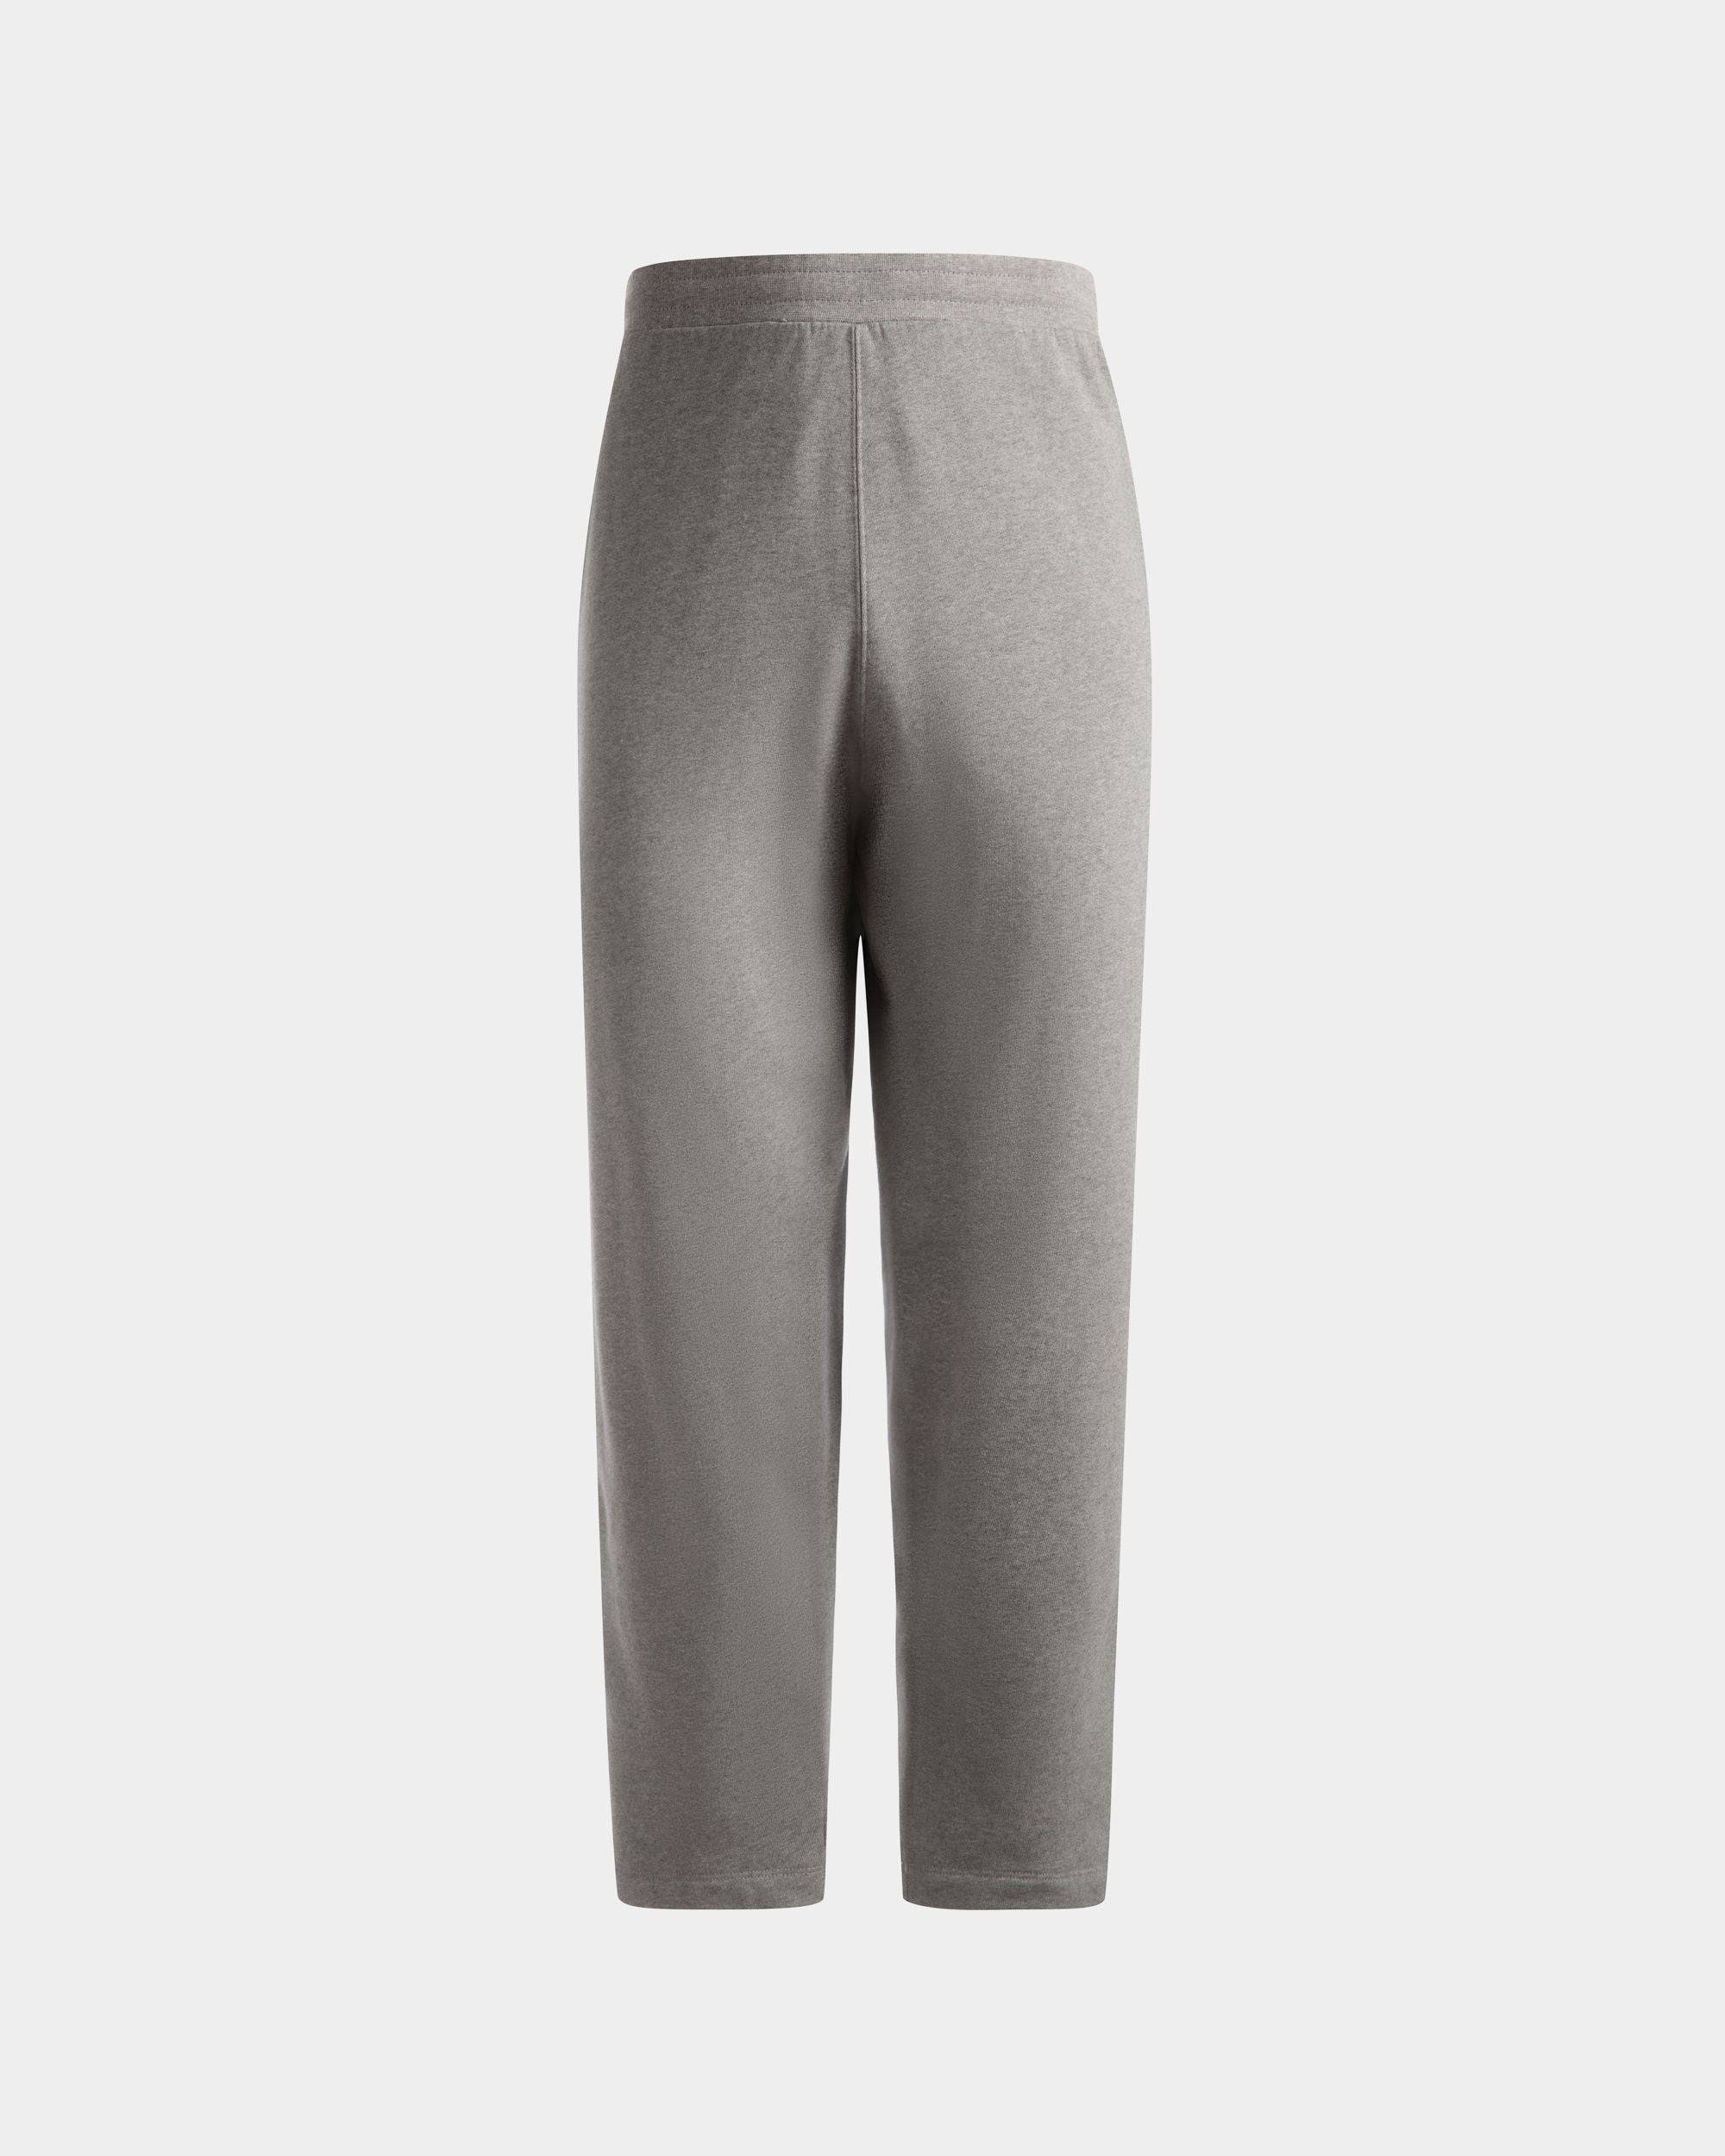 Men's Drawstring Sweatpants In Gray Melange Cotton | Bally | Still Life Front